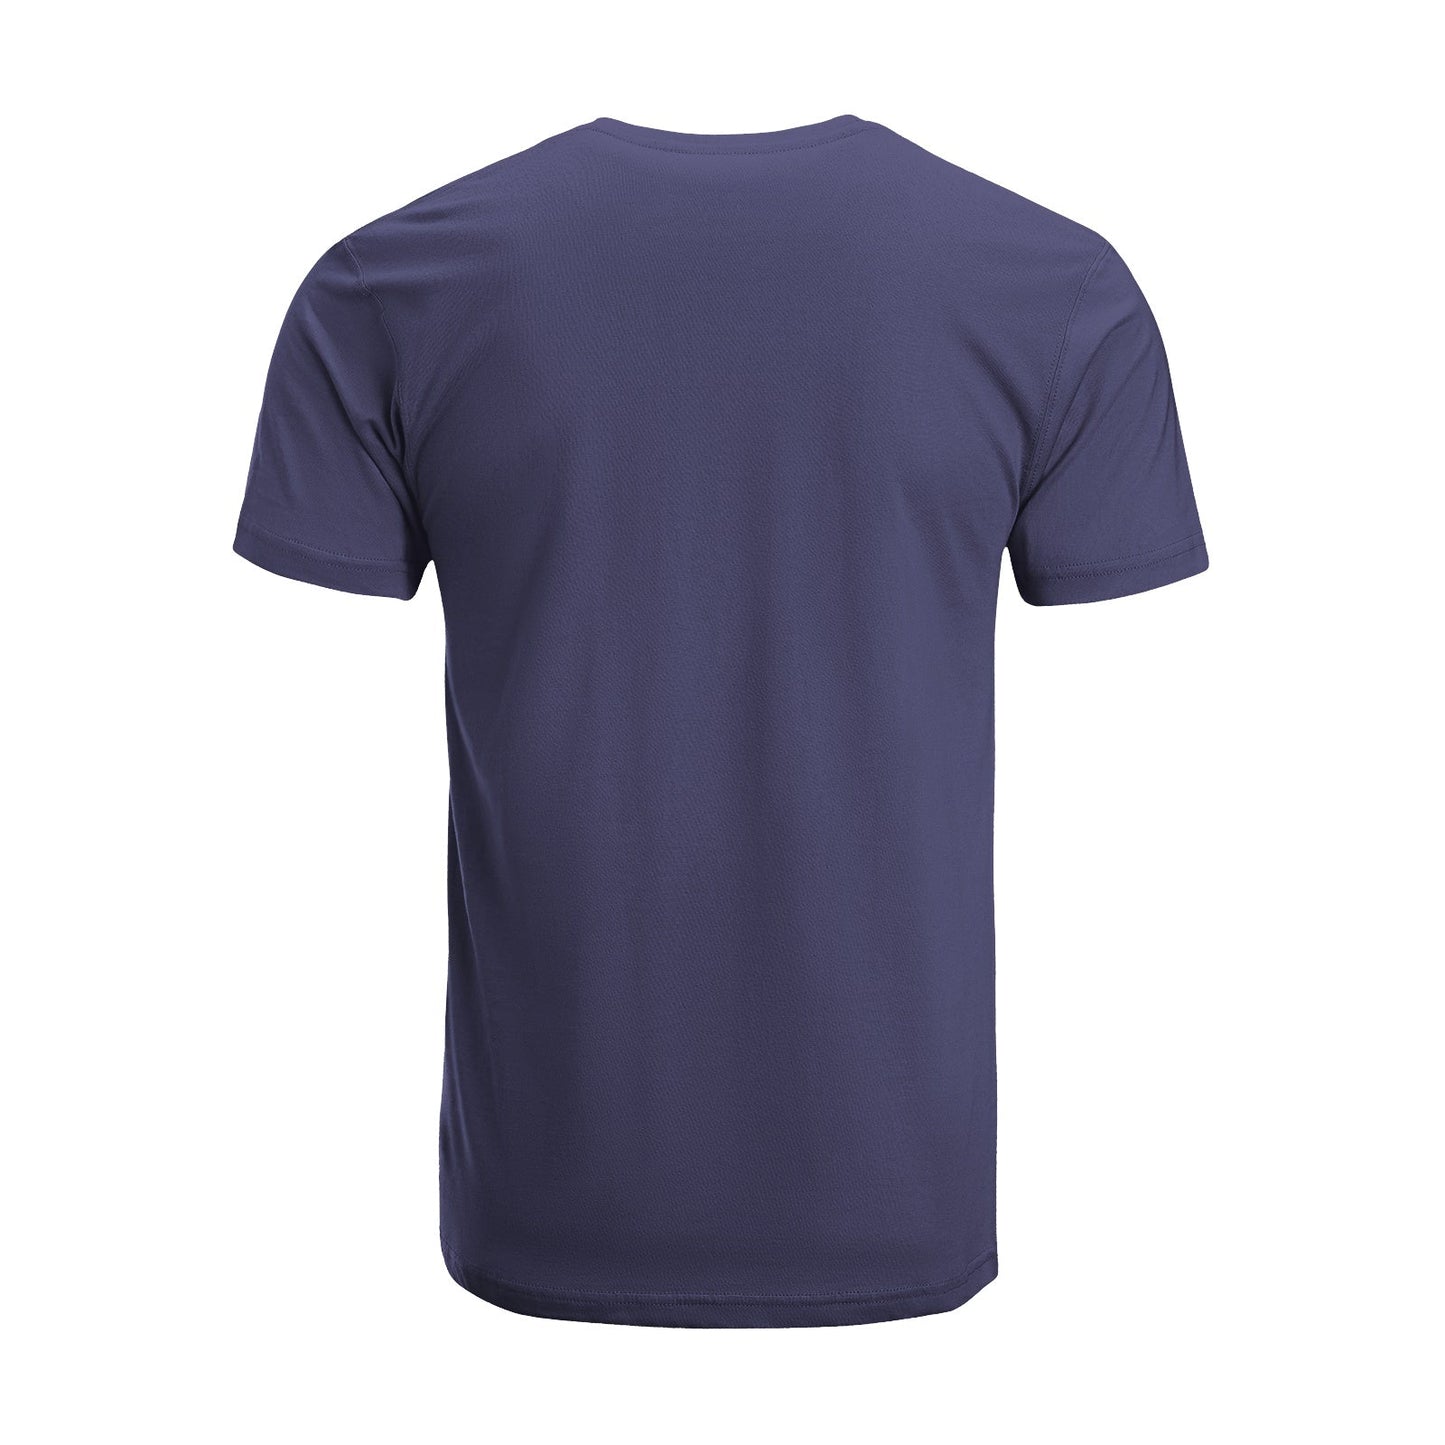 Unisex Short Sleeve Crew Neck Cotton Jersey T-Shirt VEGAN 01